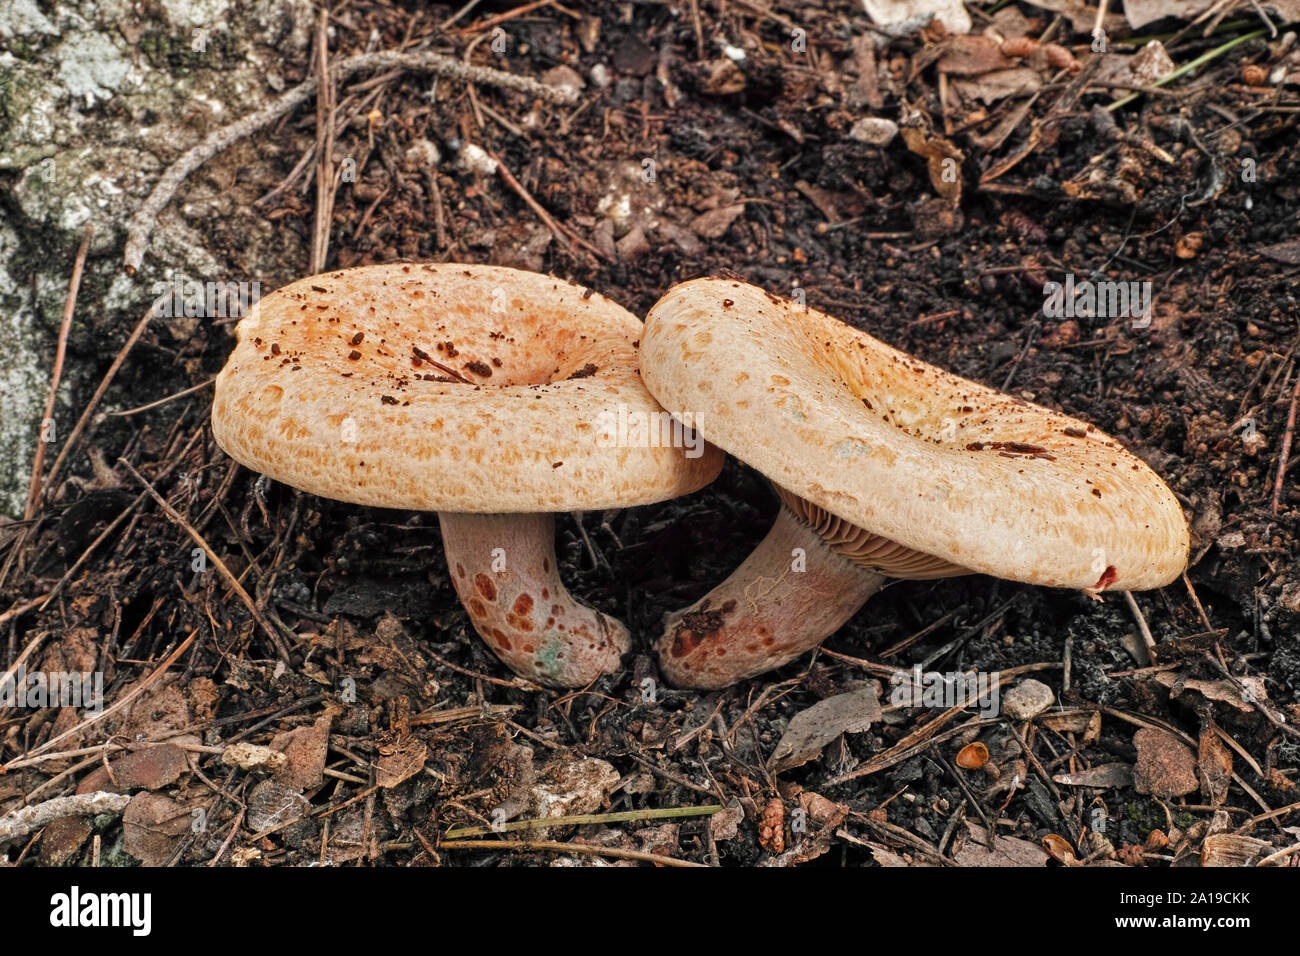 two specimen of red pine mushroom Stock Photo